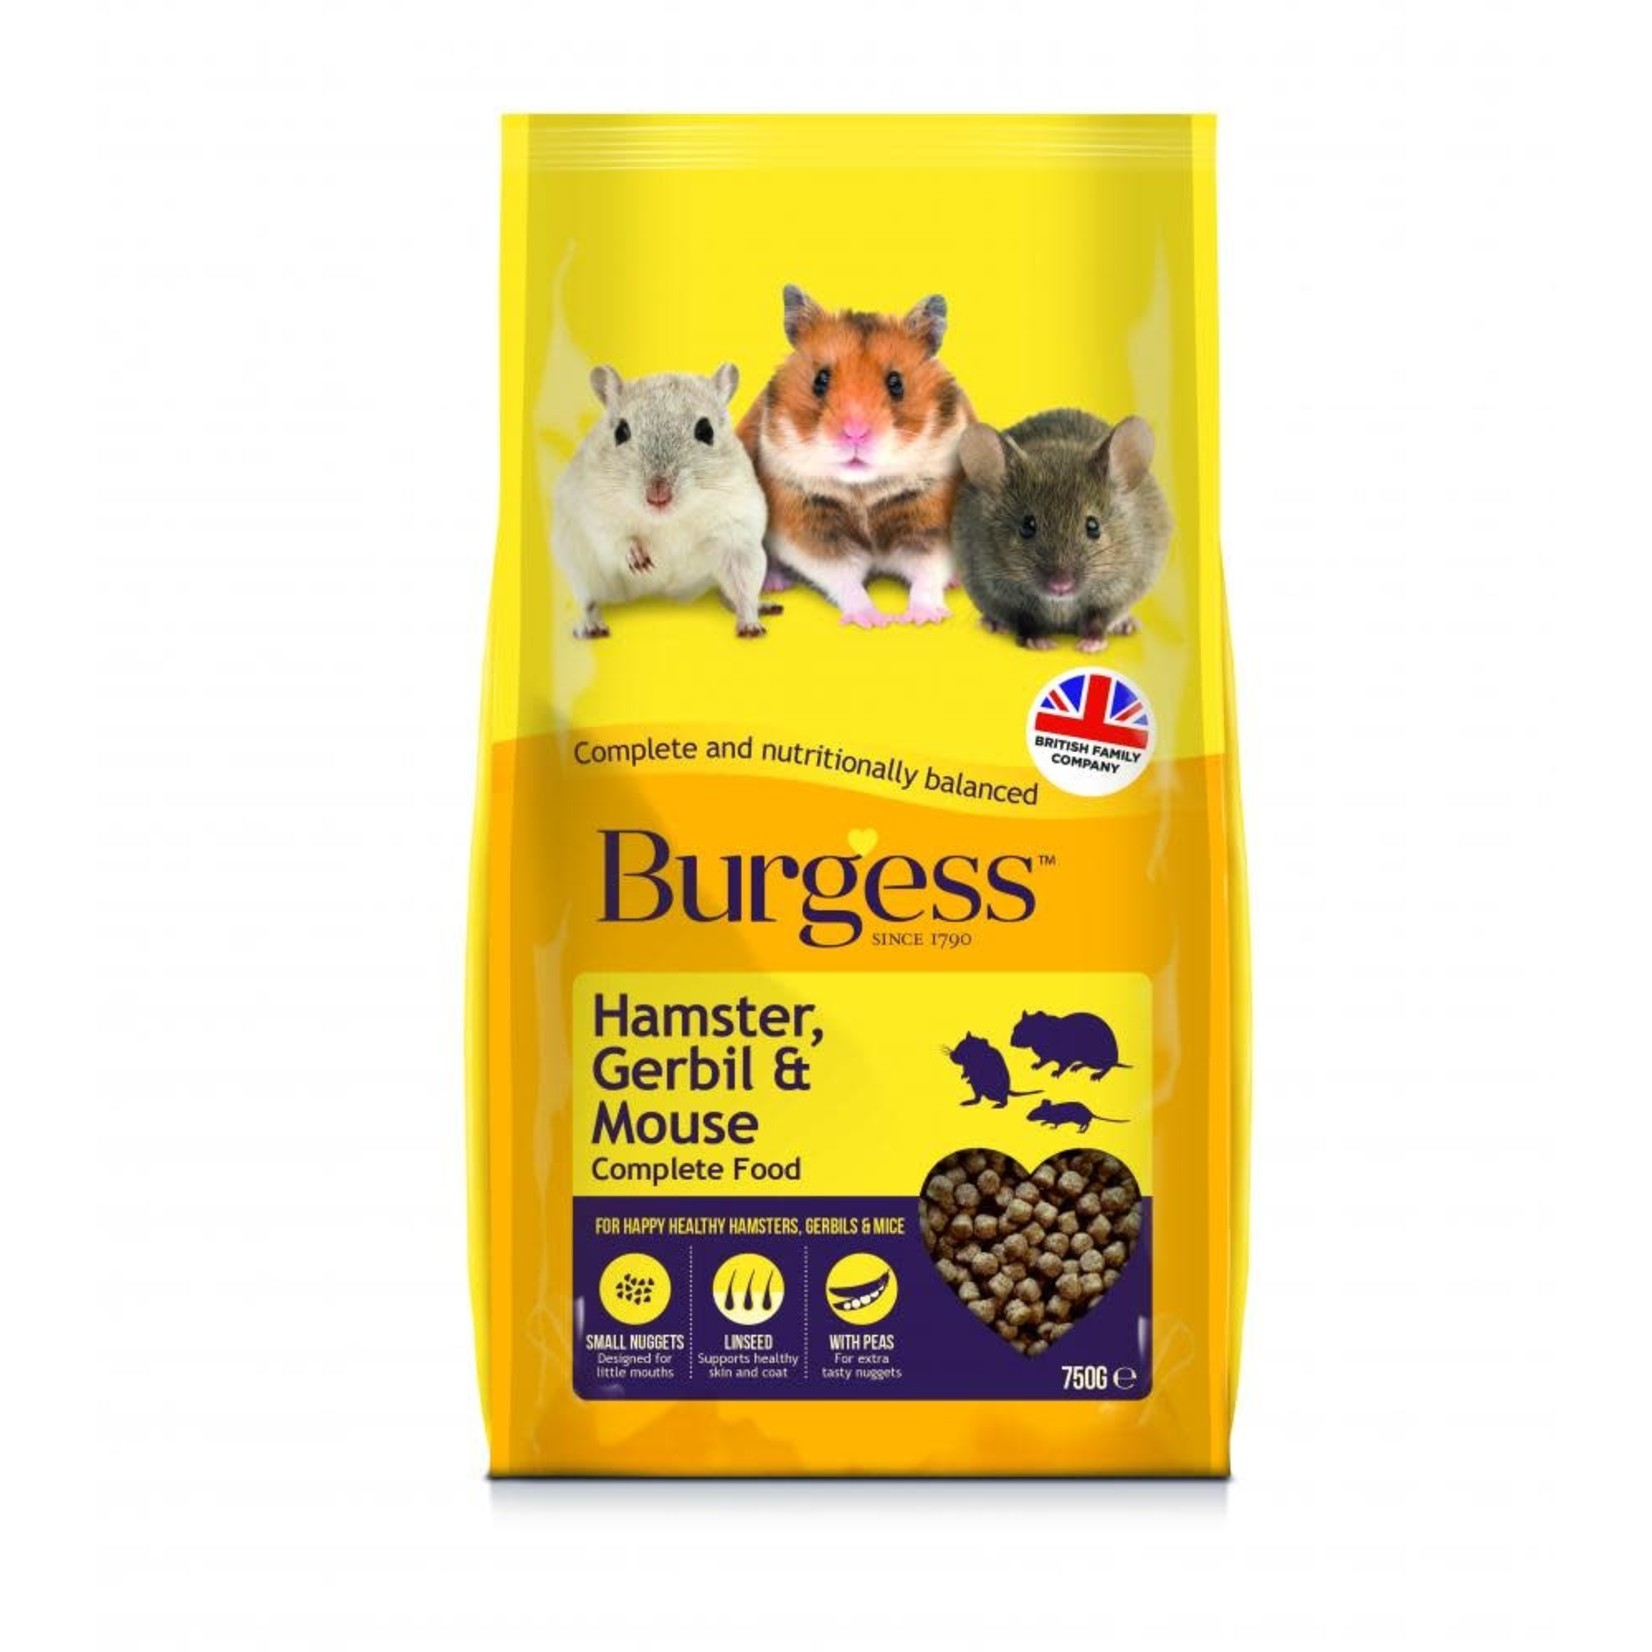 Burgess Hamster, Gerbil & Mouse Complete Food, 750g